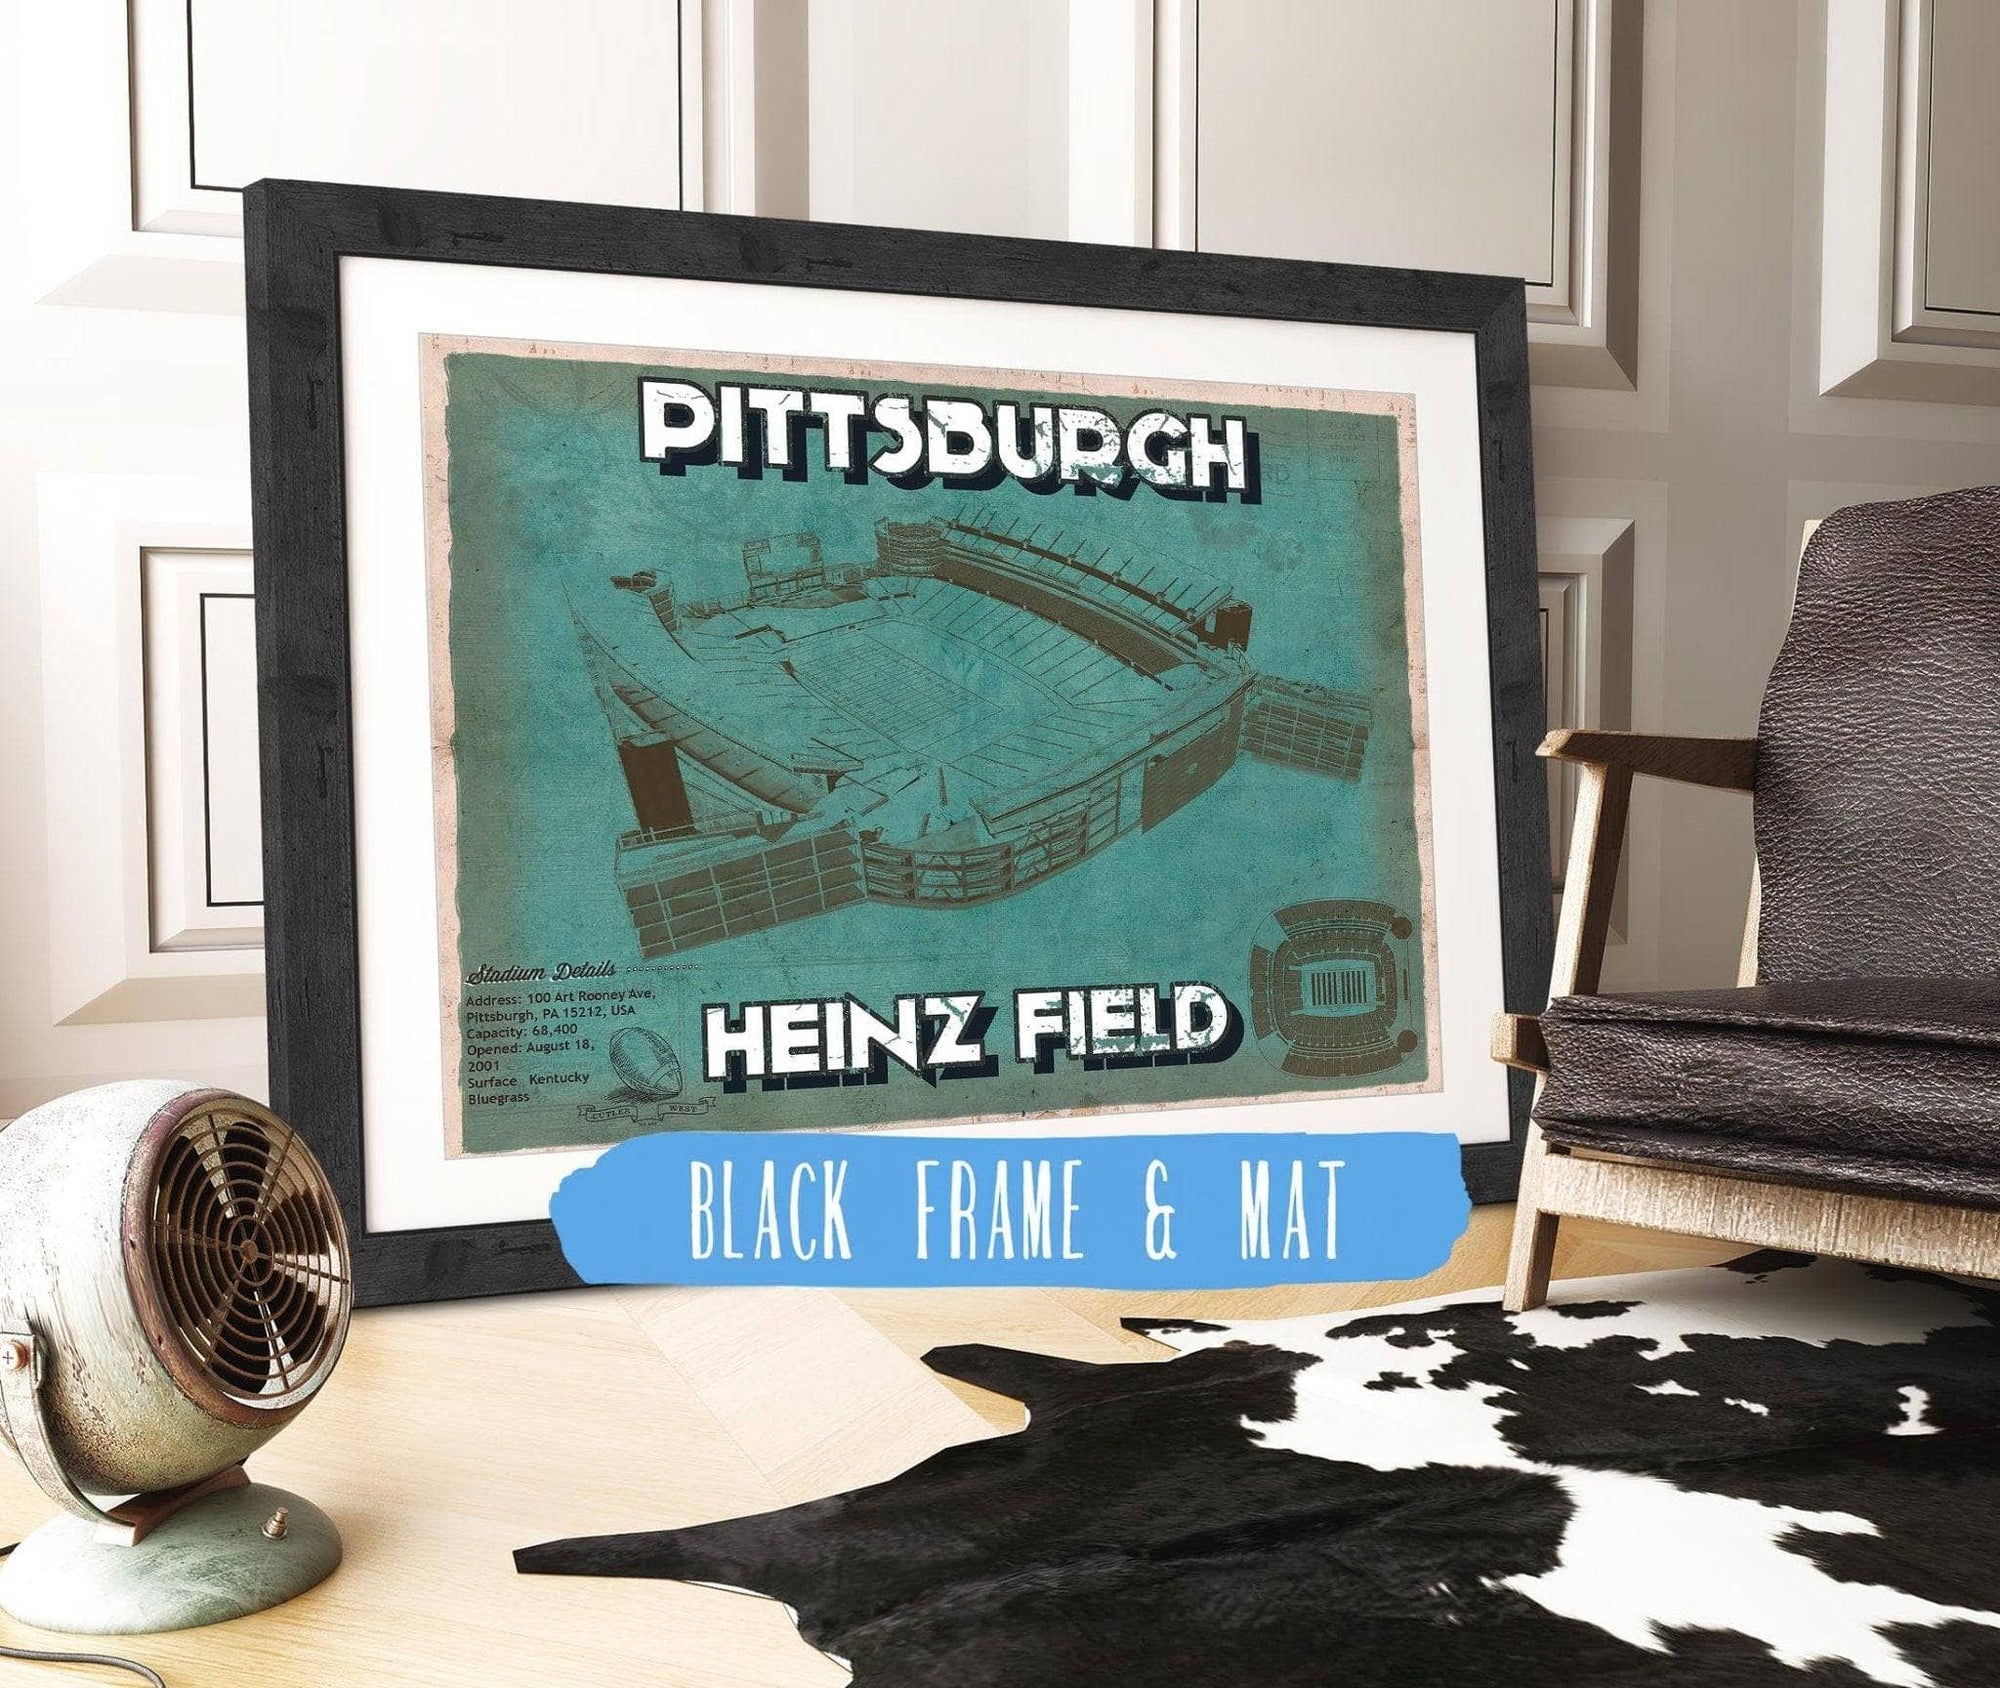 Cutler West Pro Football Collection 14" x 11" / Black Frame & Mat Pittsburgh Steelers Stadium Art Team Color- Heinz Field - Vintage Football Print 235353075